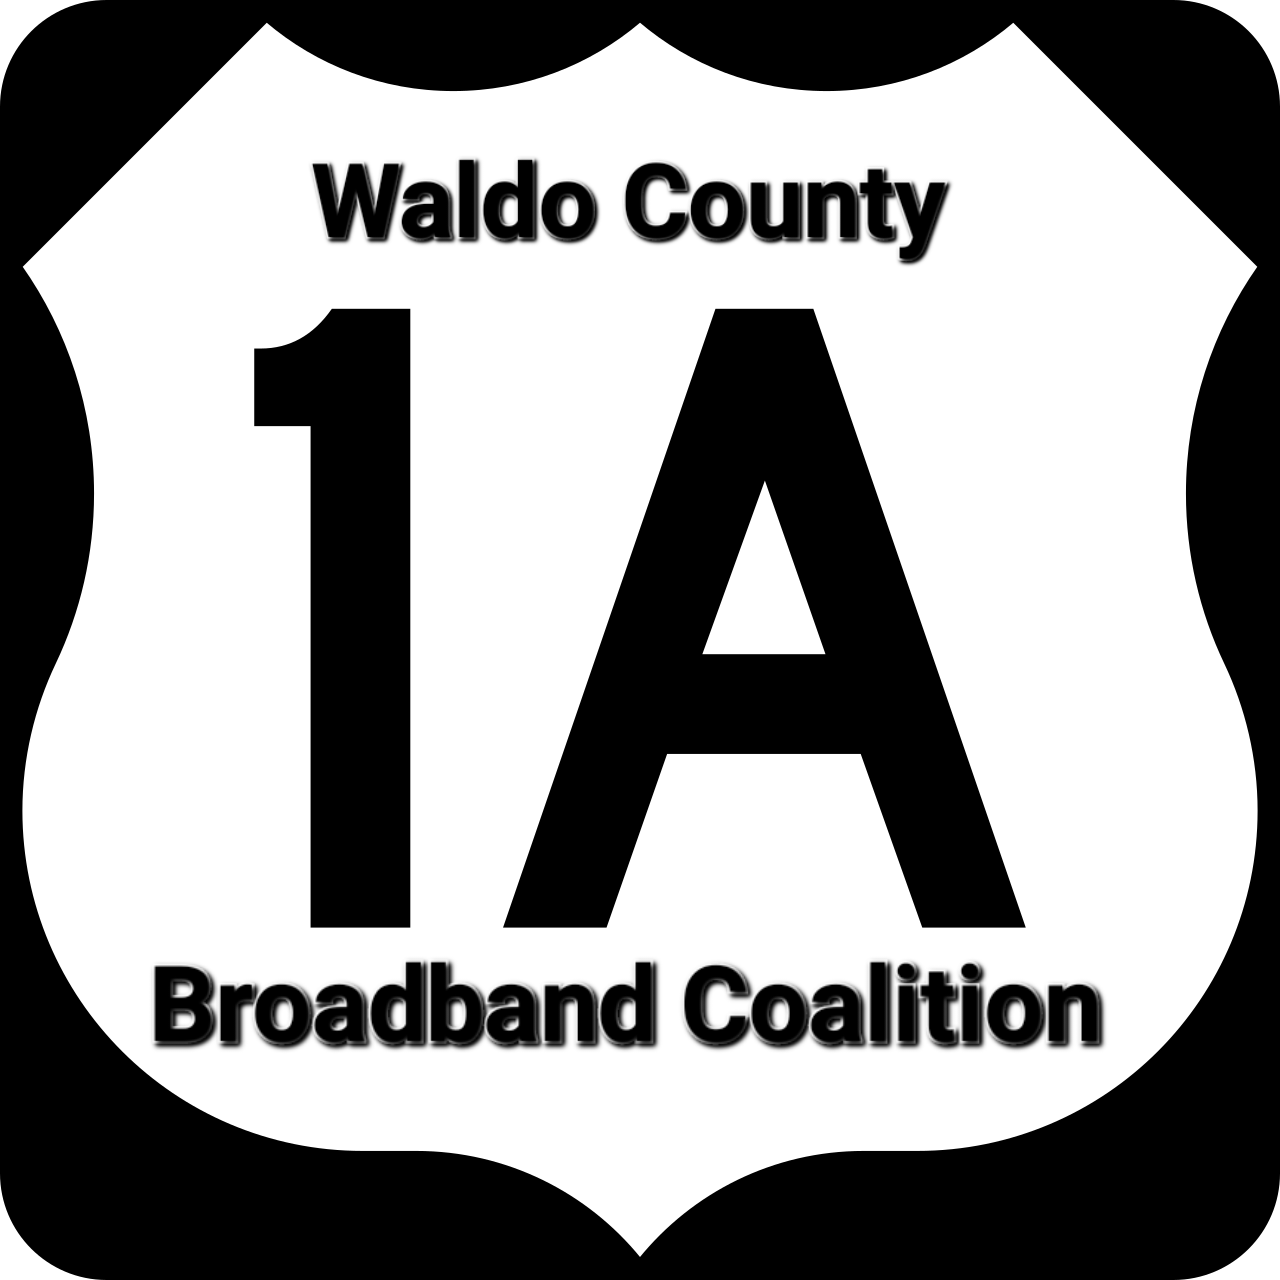 1A Waldo County Broadband Coalition